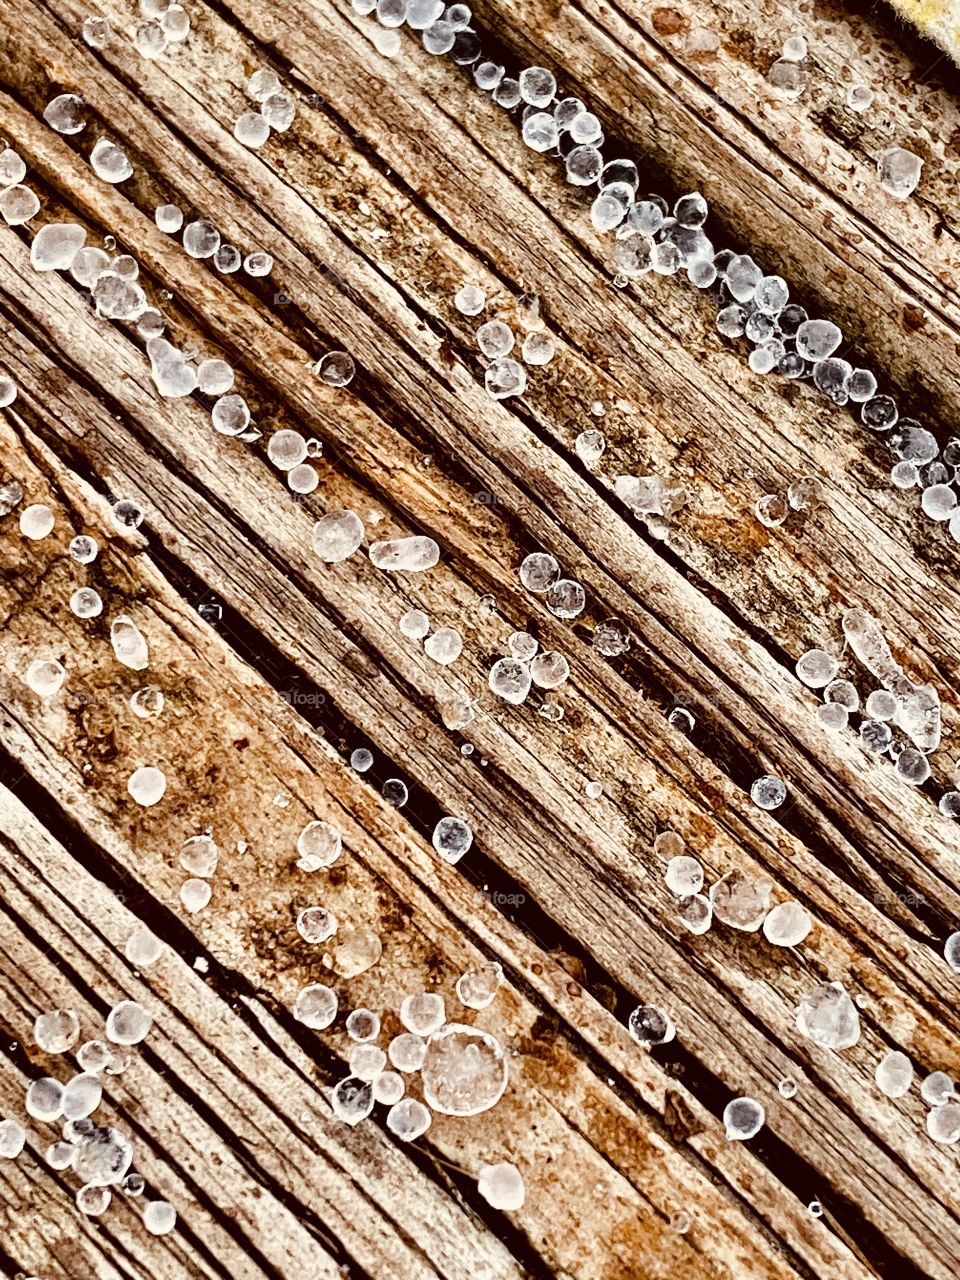 Bits of sleet on a wooden deck. Winter storm.